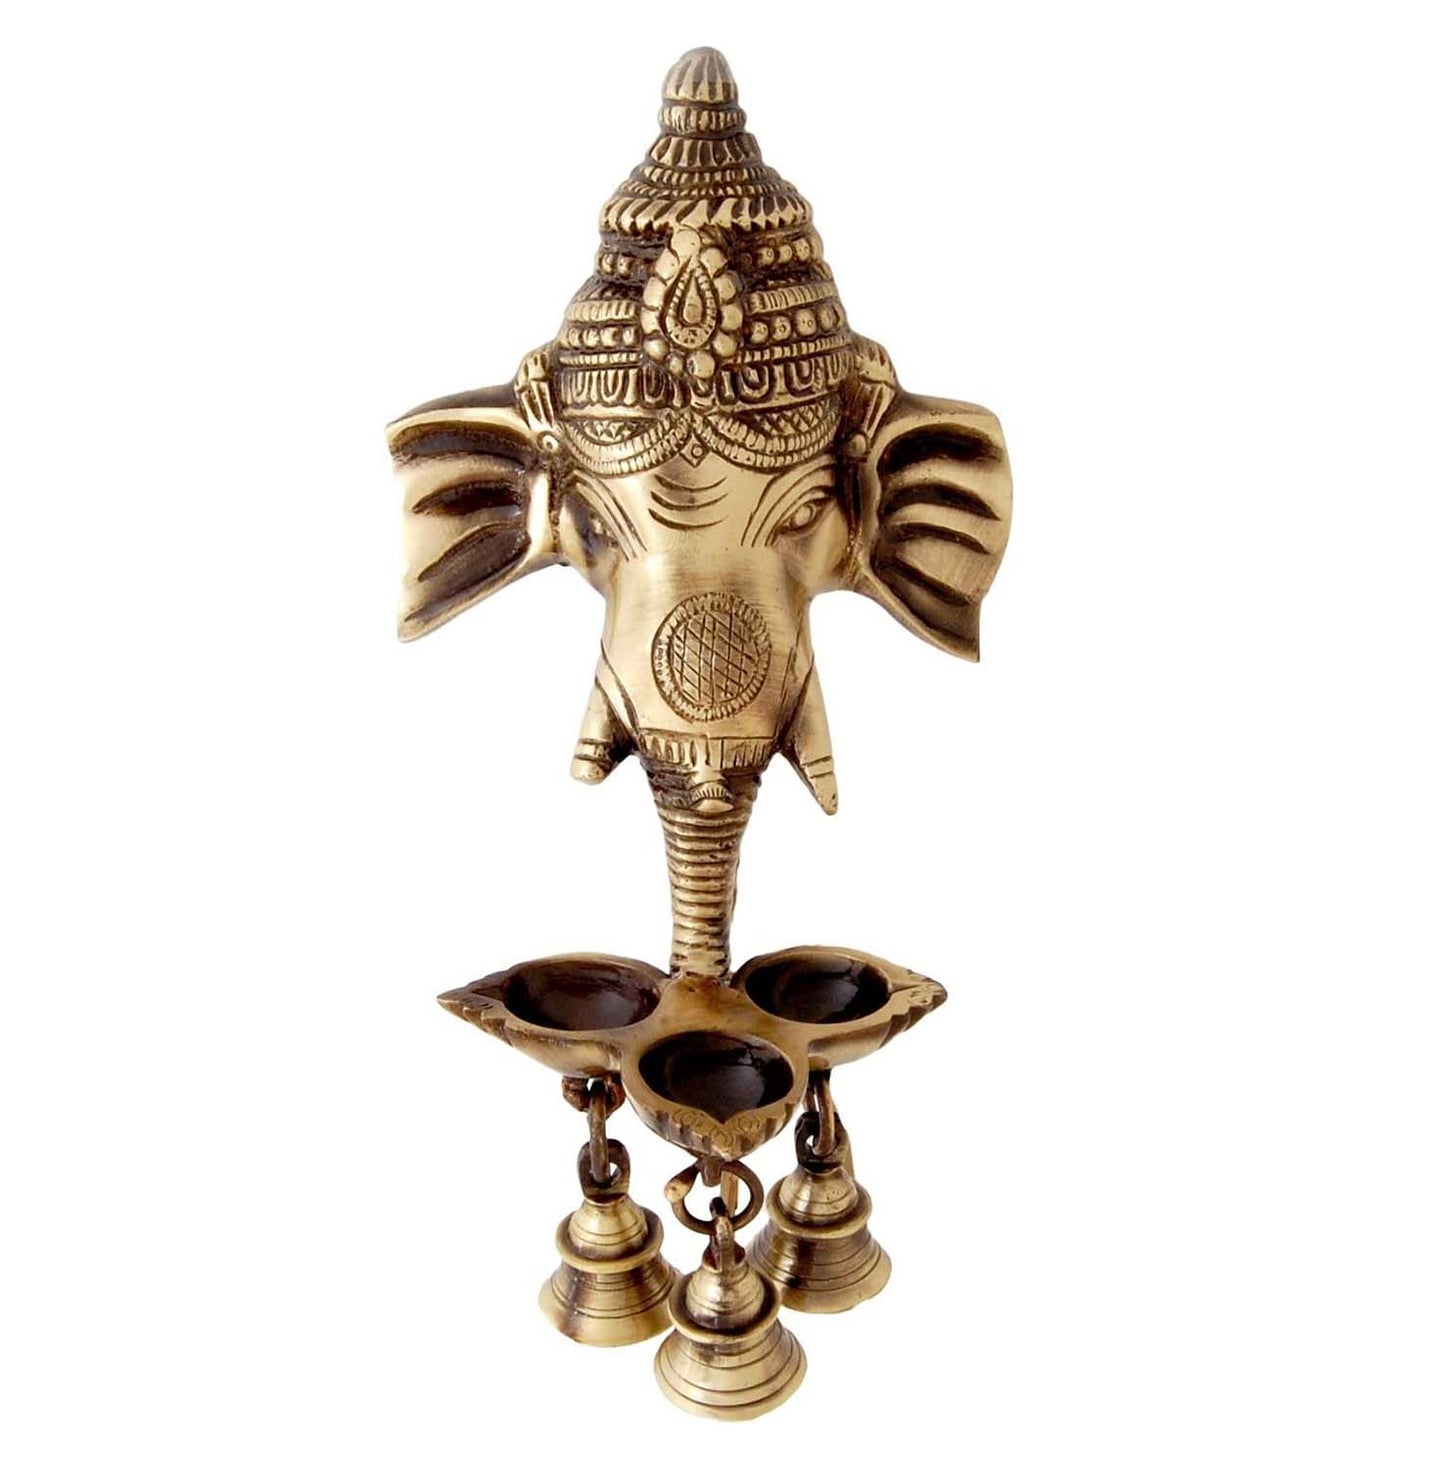 Brass Ganesha Diya With Bell 9 inches